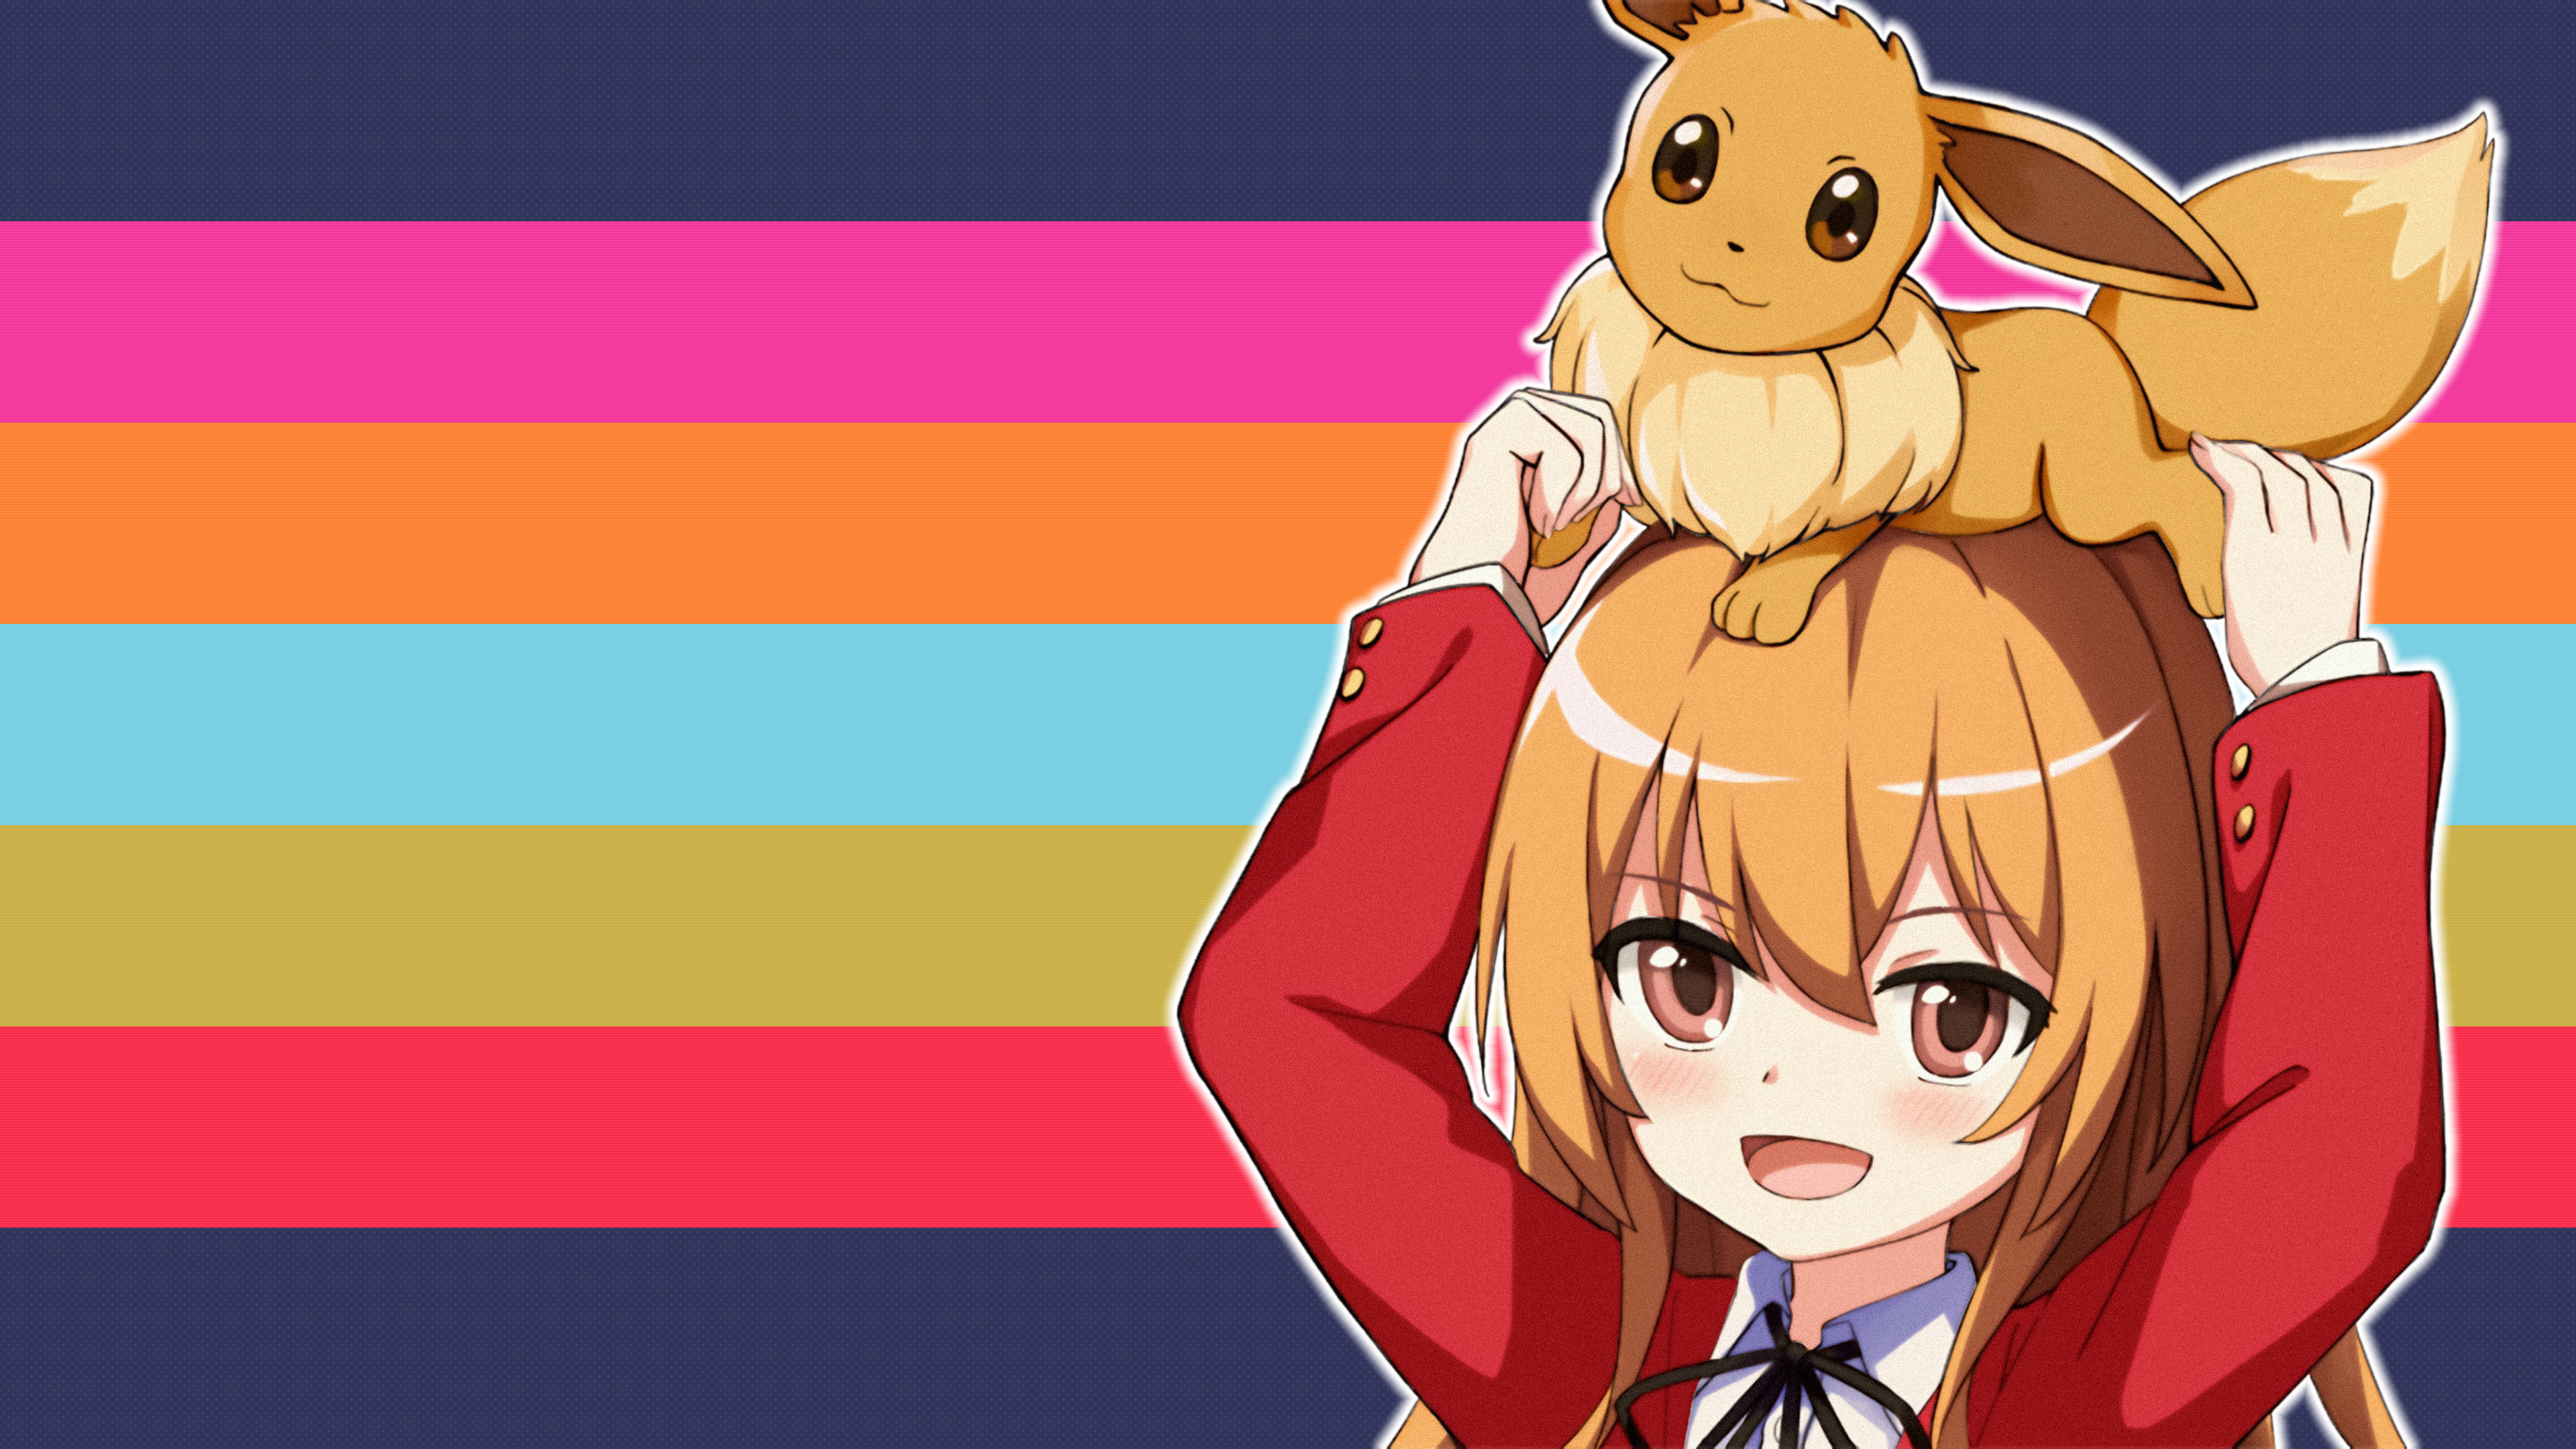 Anime Anime Girls School Uniform Long Hair Bangs Blunt Bangs Blonde Pokemon Video Games Colorful Red 3840x2160